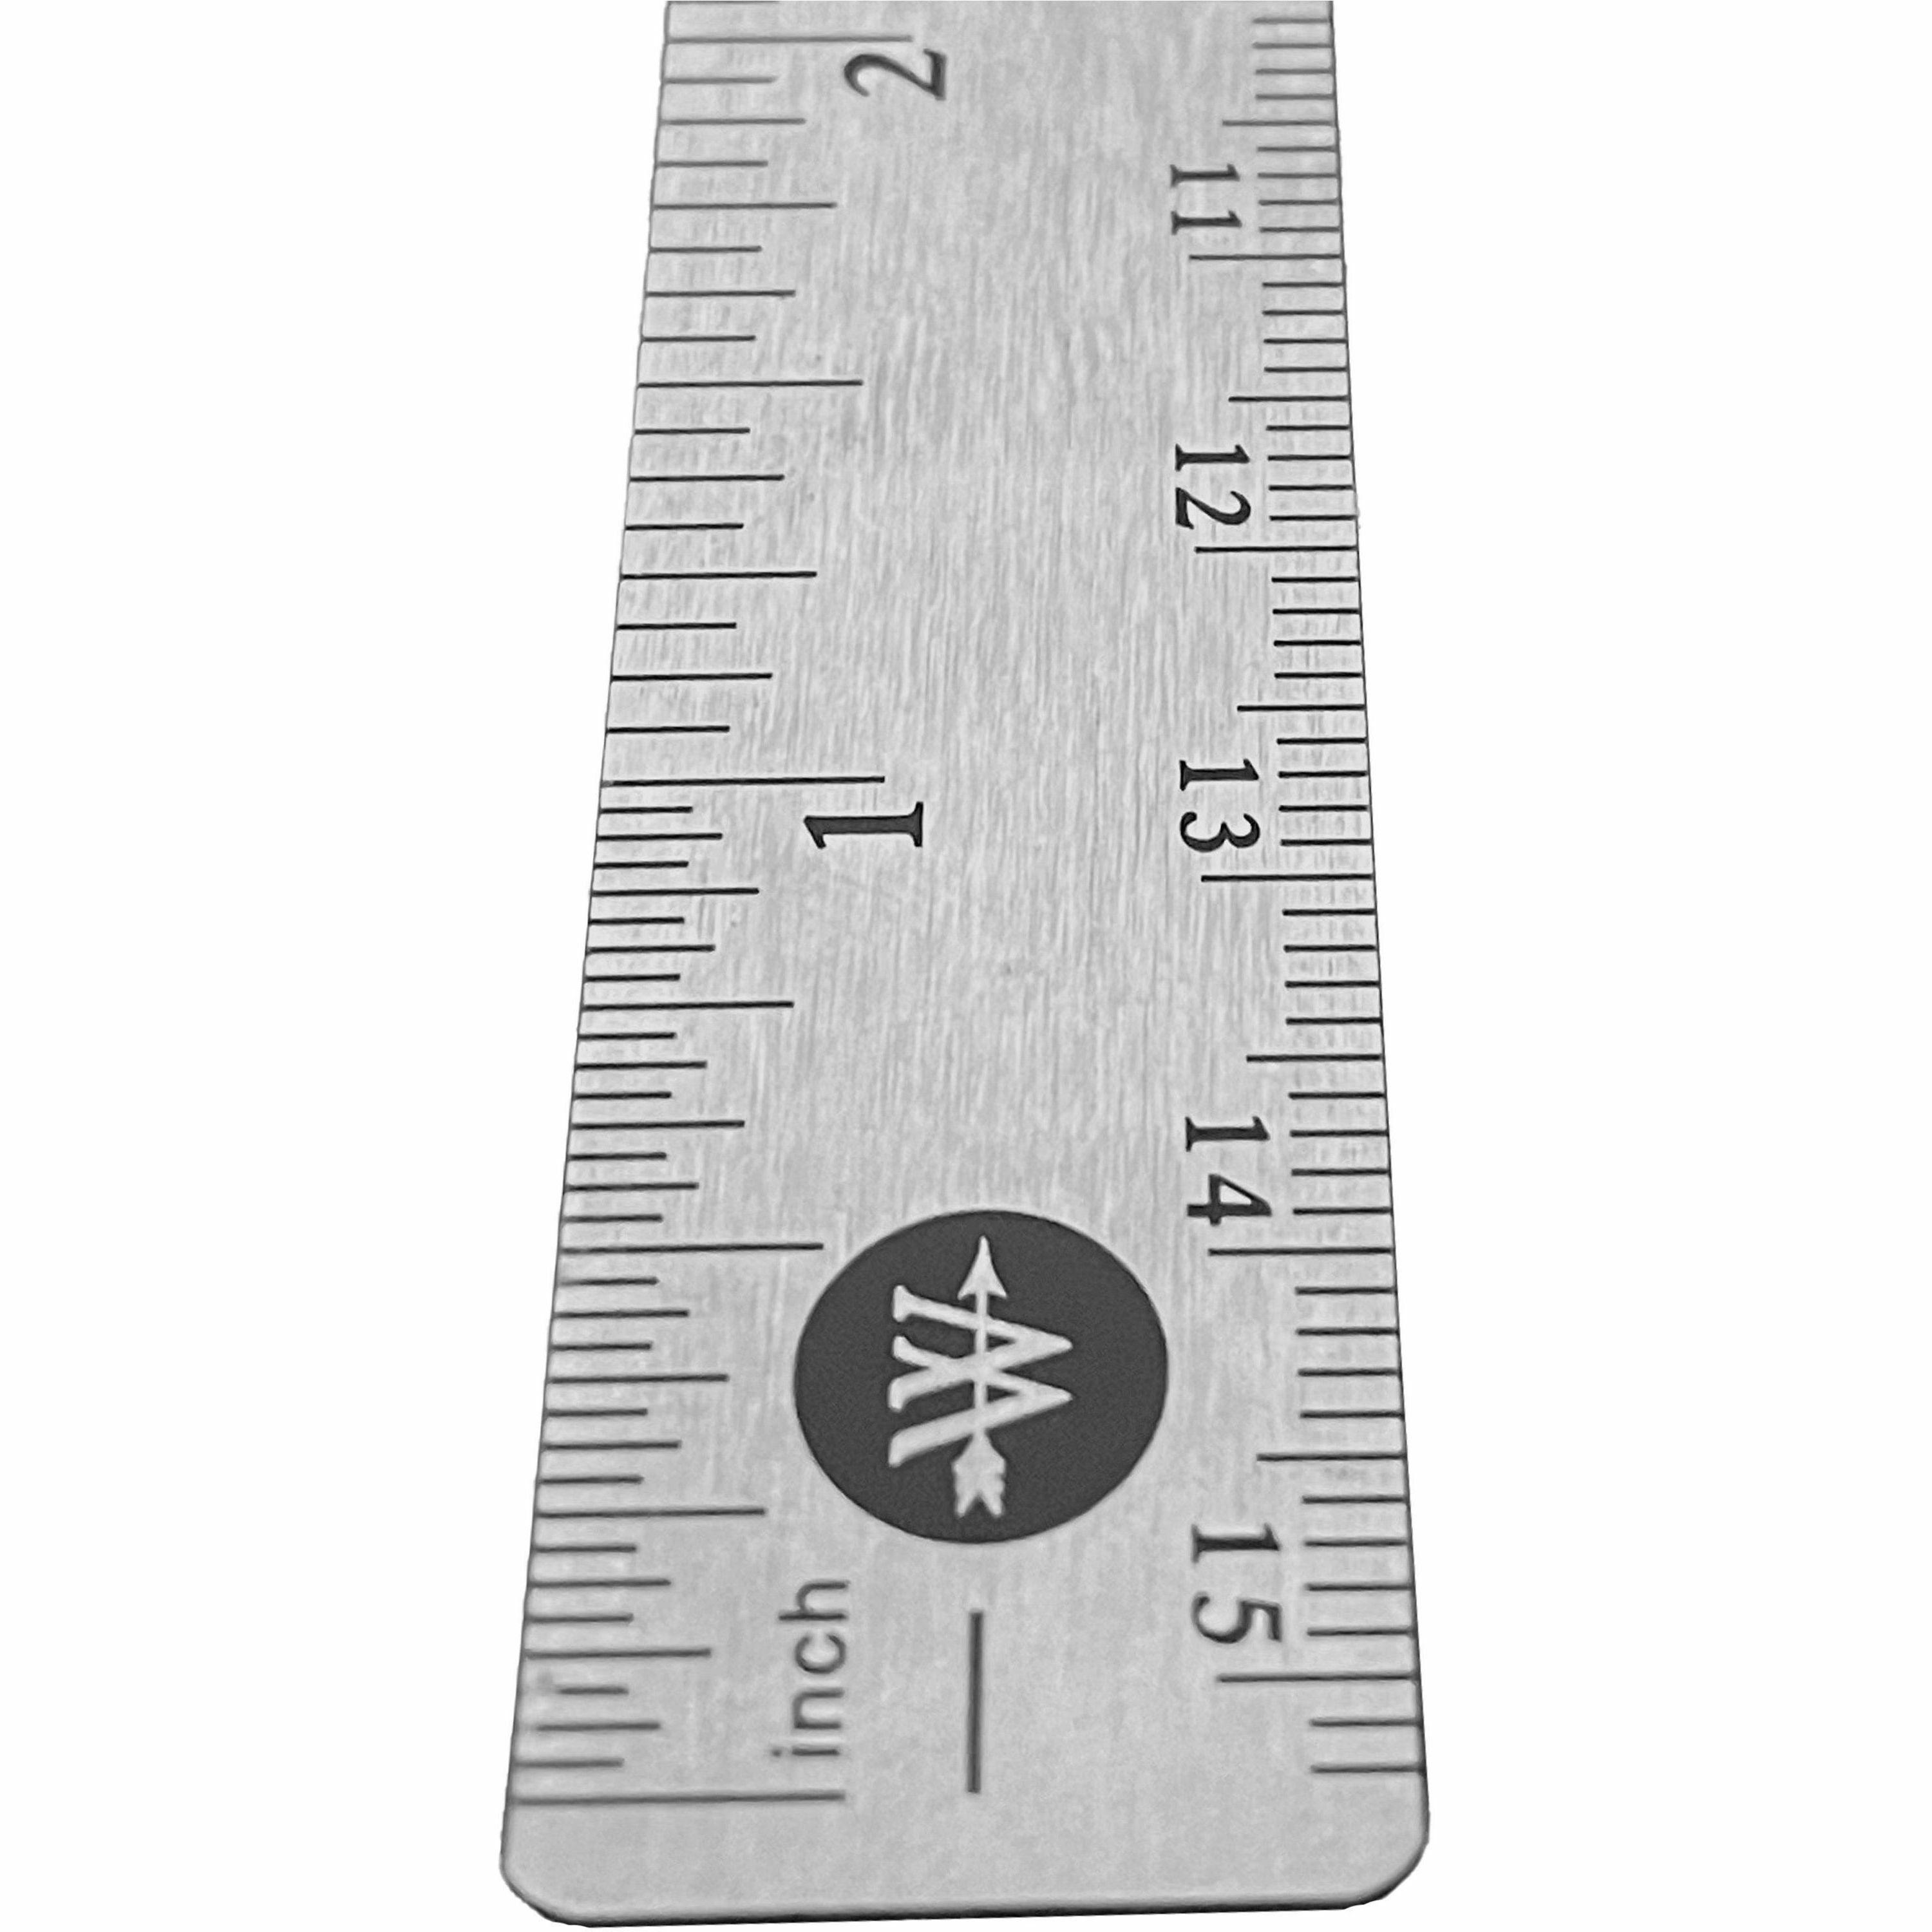 westcott-6-stainless-steel-rulers-6-length-08-width-1-16-1-32-graduations-metric-imperial-measuring-system-stainless-steel-12-box-stainless-steel_acm10414bx - 2